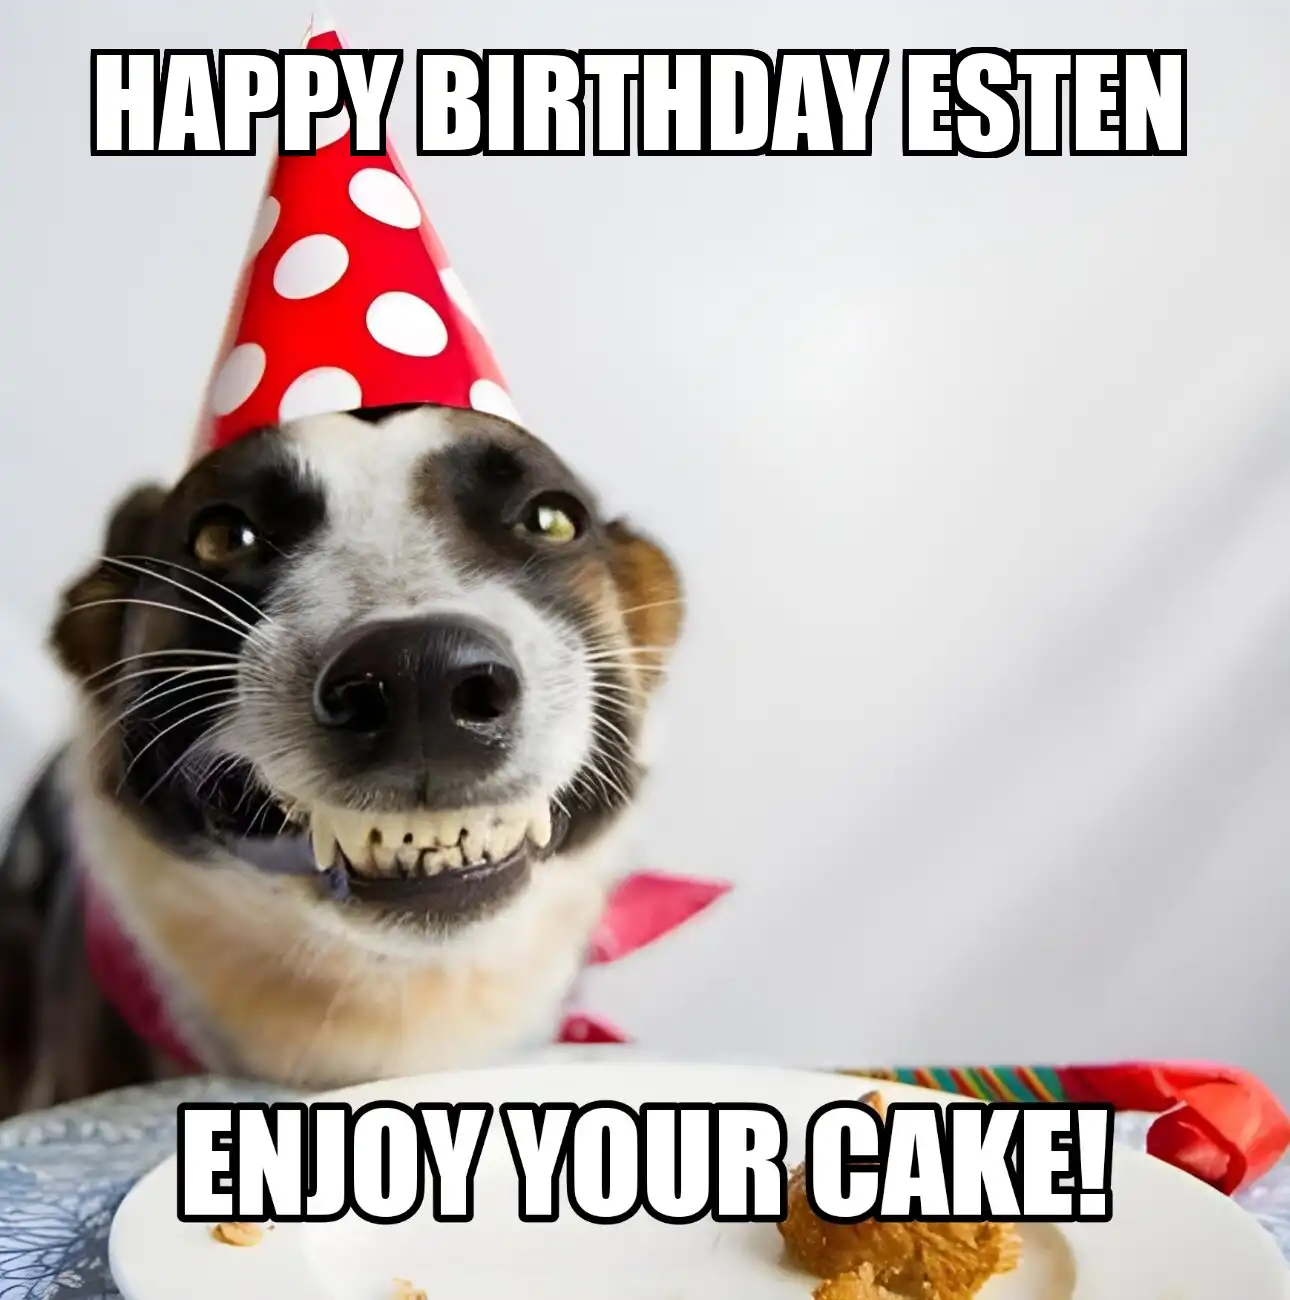 Happy Birthday Esten Enjoy Your Cake Dog Meme